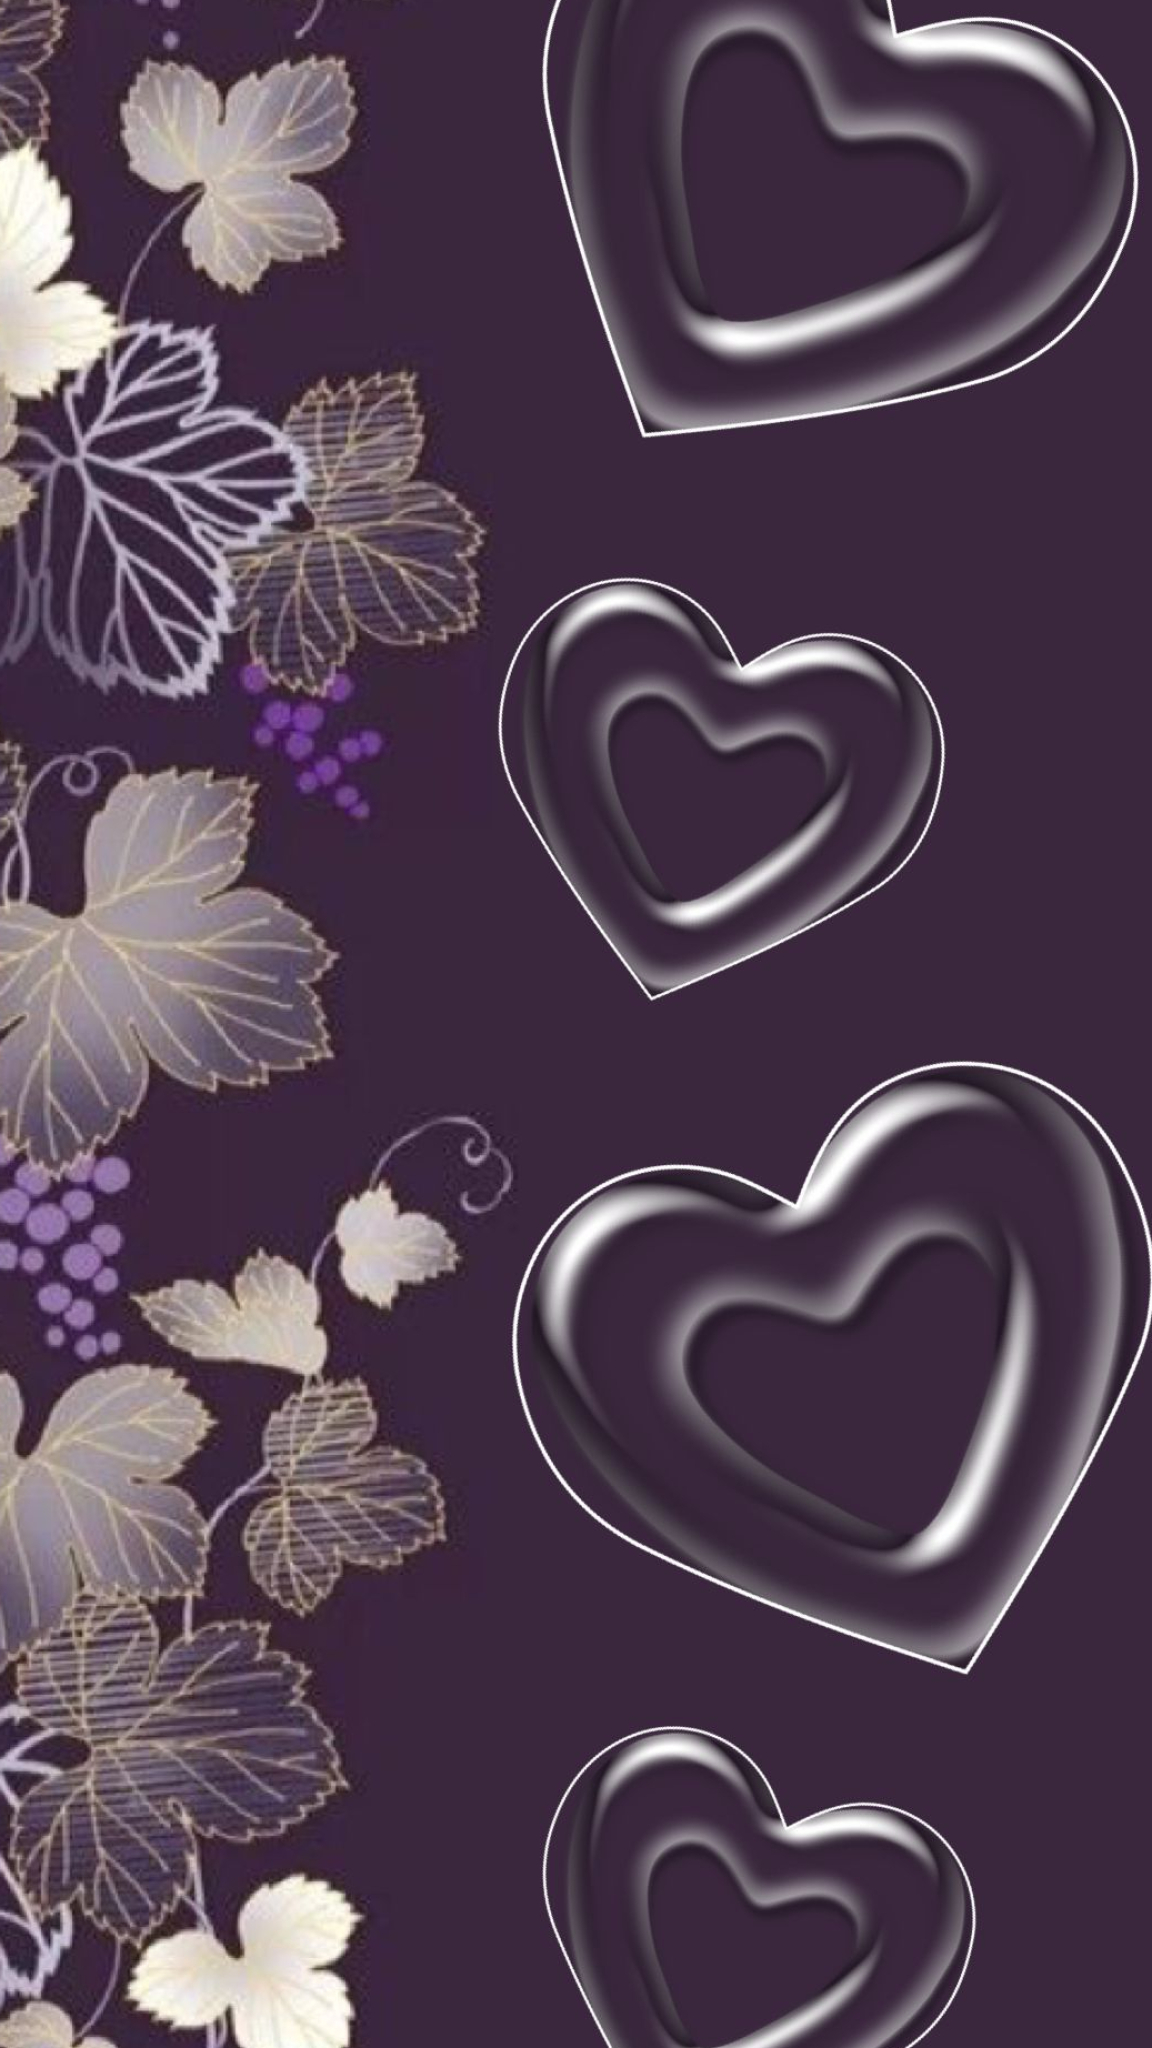 1152x2048 Wallpaper iPhone | Purple wallpaper iphone, Valentines wallpaper, Love wallpaper backgrounds